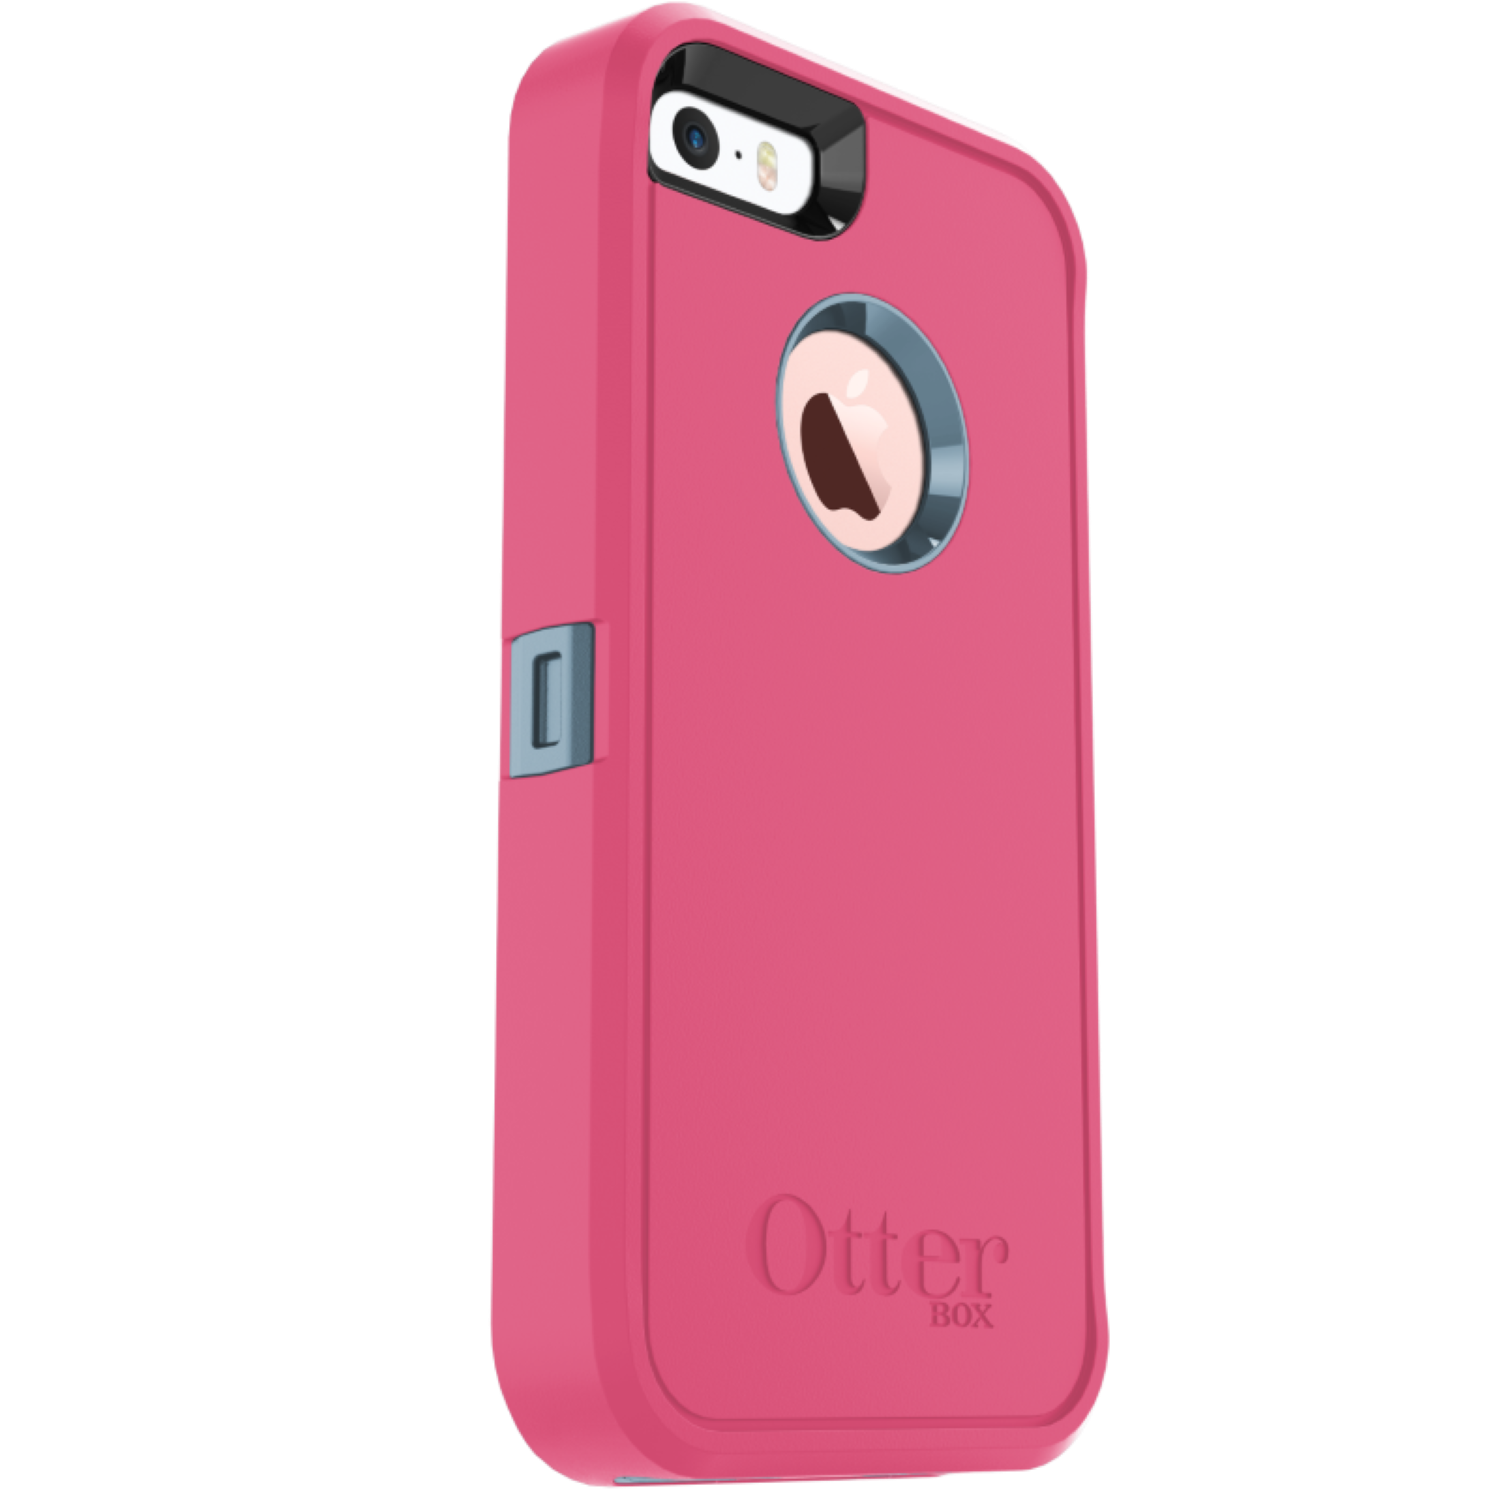 OtterBox Defender Case for iPhone 5/5s/SE (No Clip) - Easy-Open Box ...